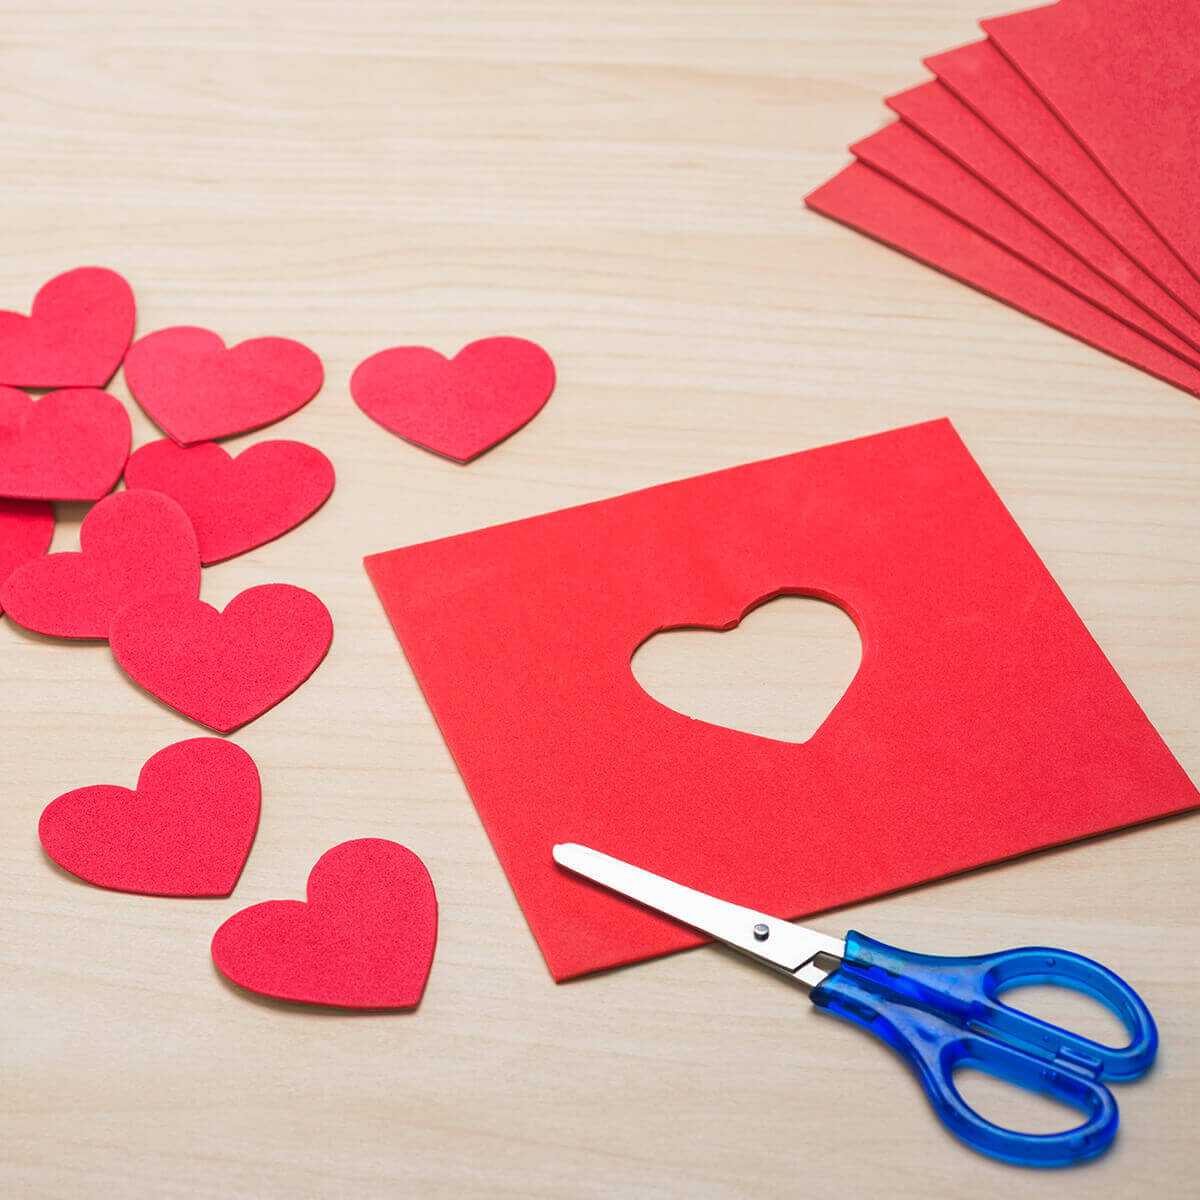 Family Valentine’s Day Activity Ideas